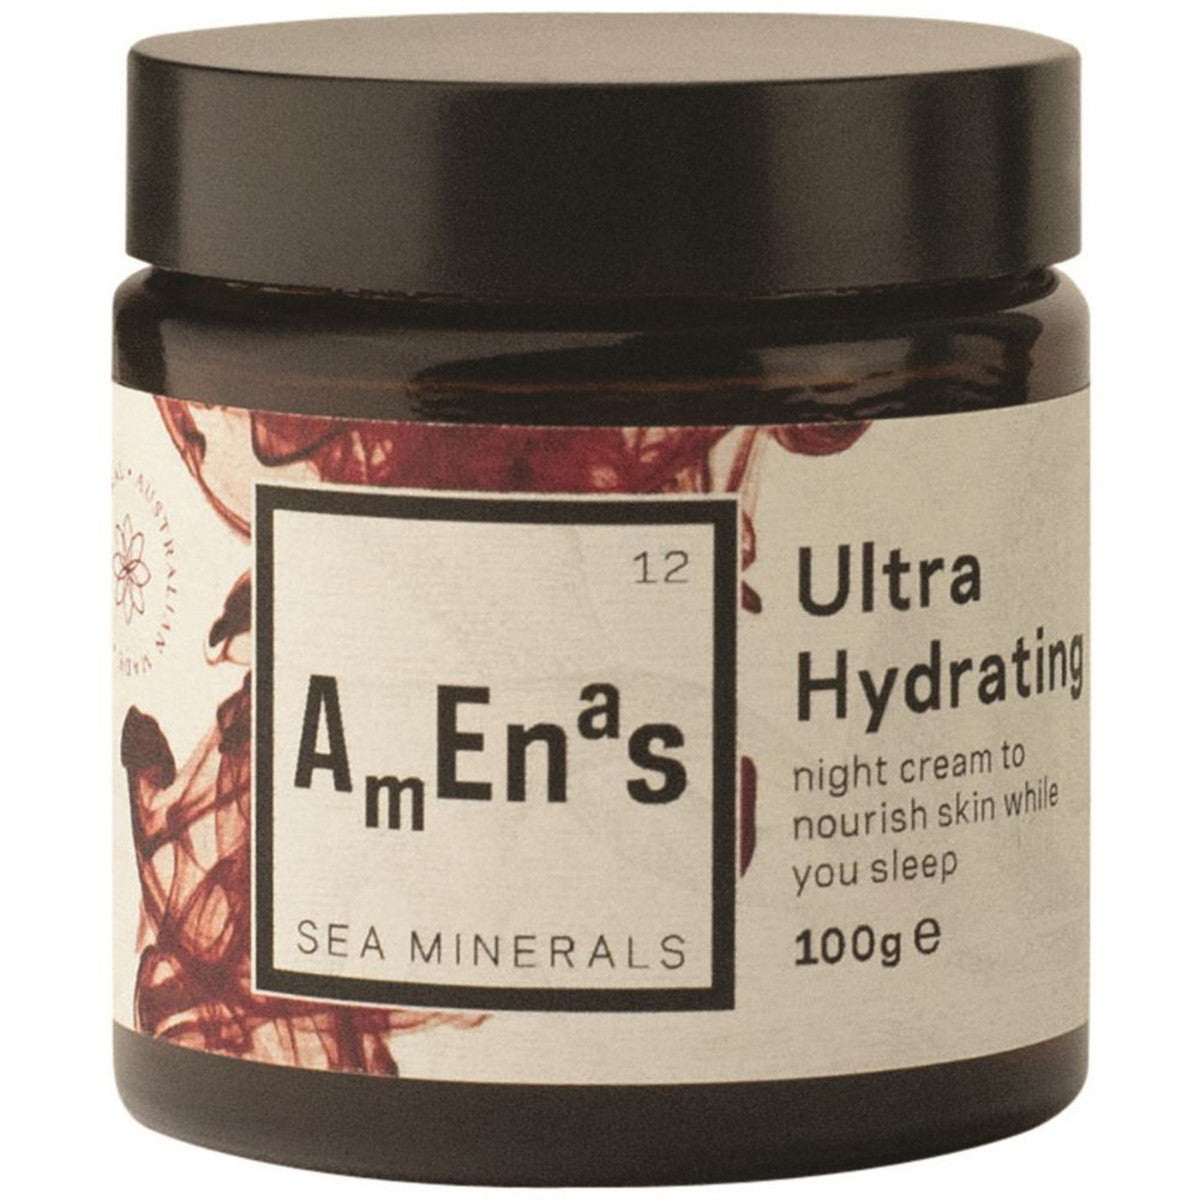 Amenas Sea Minerals - Ultra Hydrating Night Cream